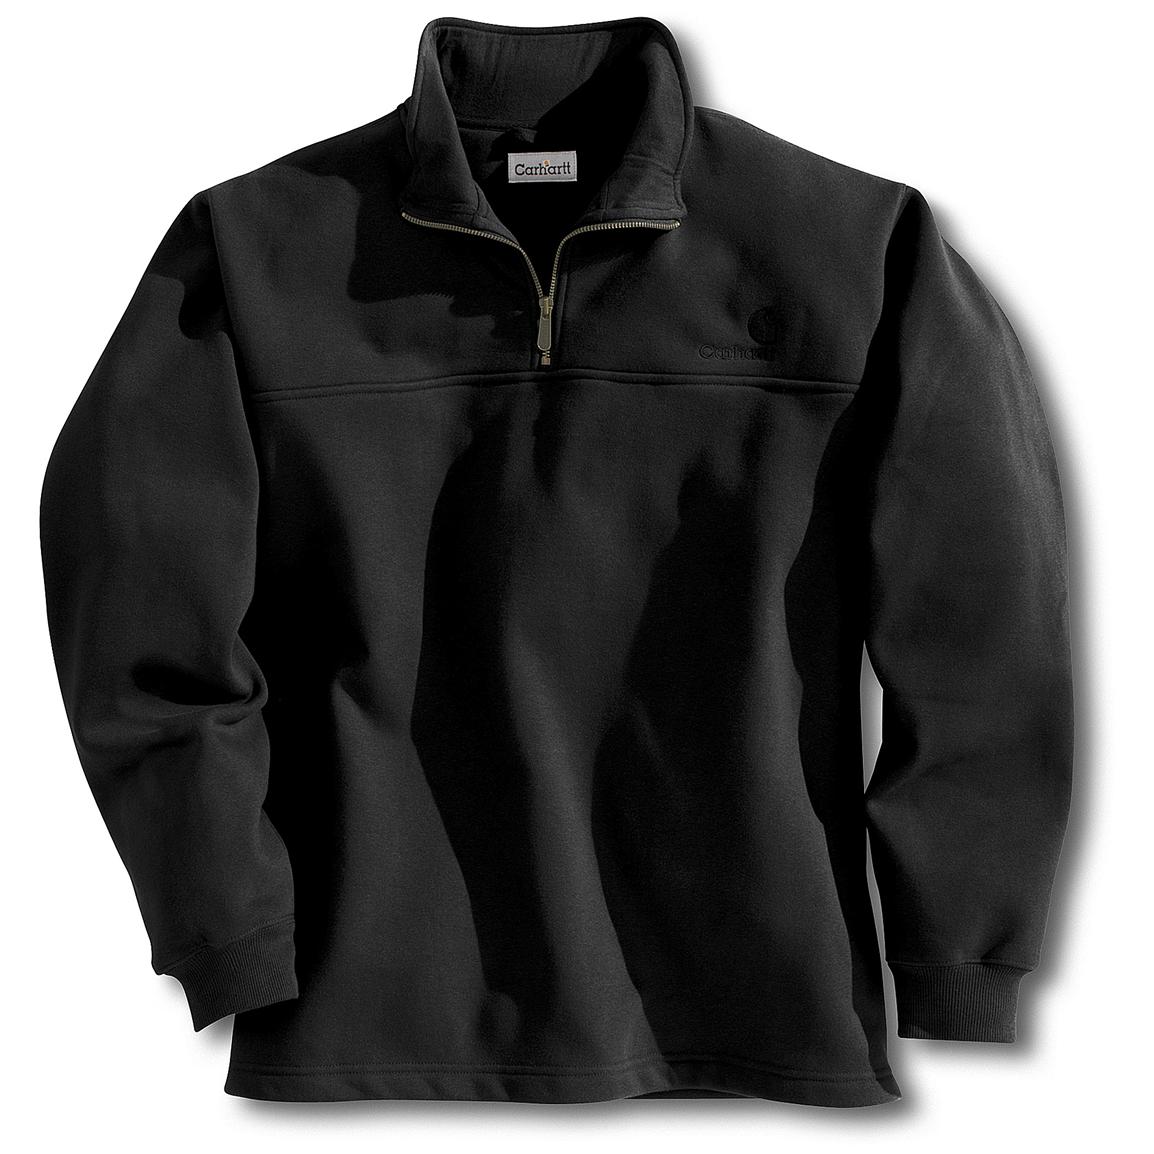 Download Tall Carhartt® Heavyweight Zip-Mock Sweatshirt - 125154, Sweatshirts & Hoodies at Sportsman's Guide